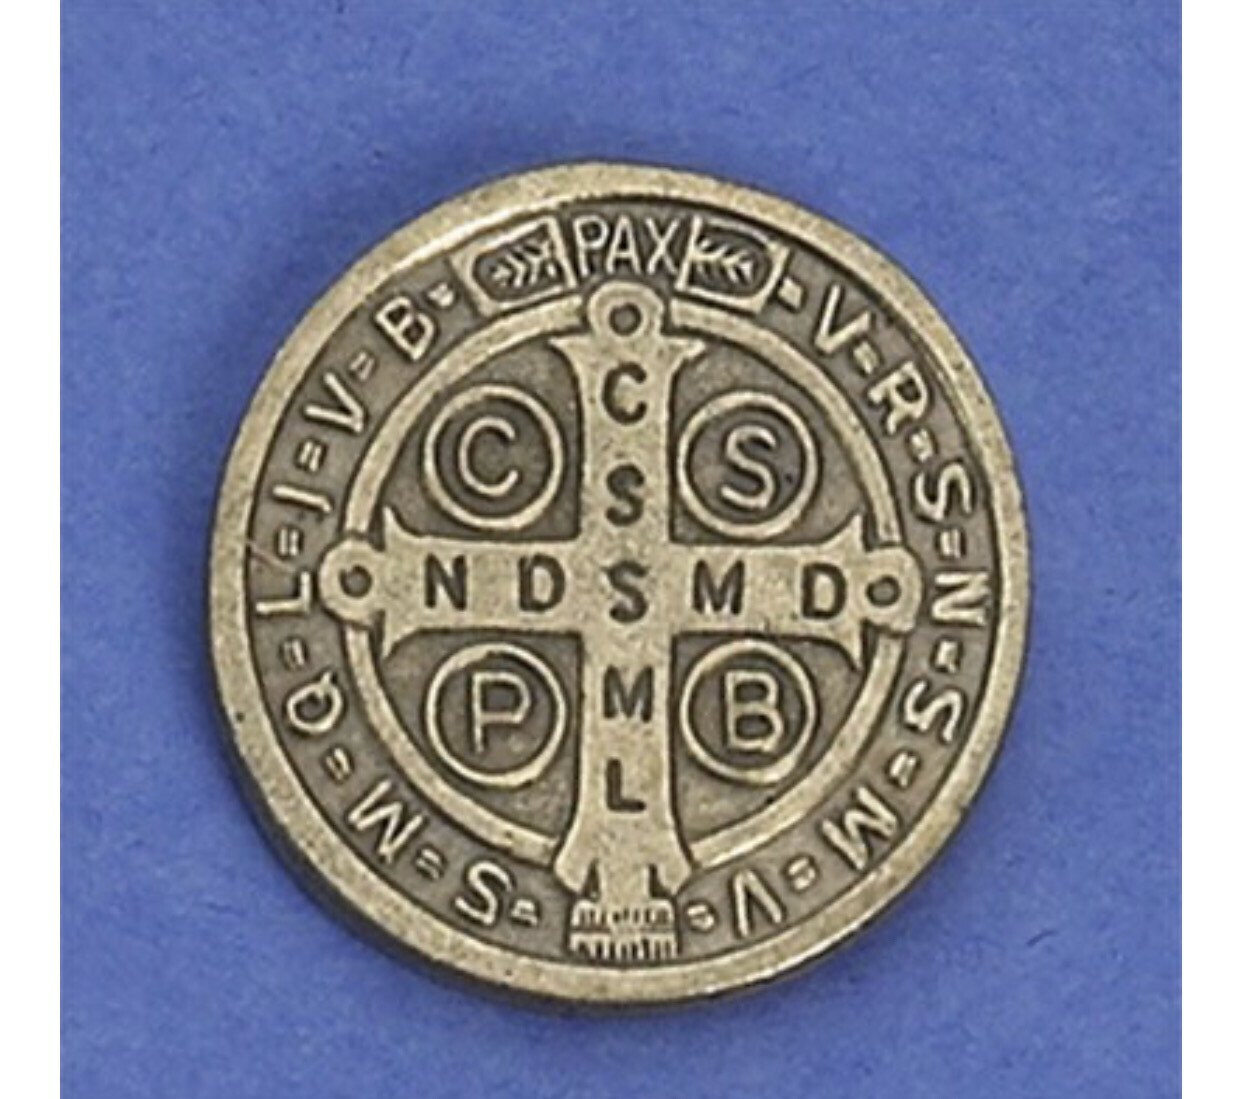 Saint Benedict Medal Lapel Pin
Brass Tone